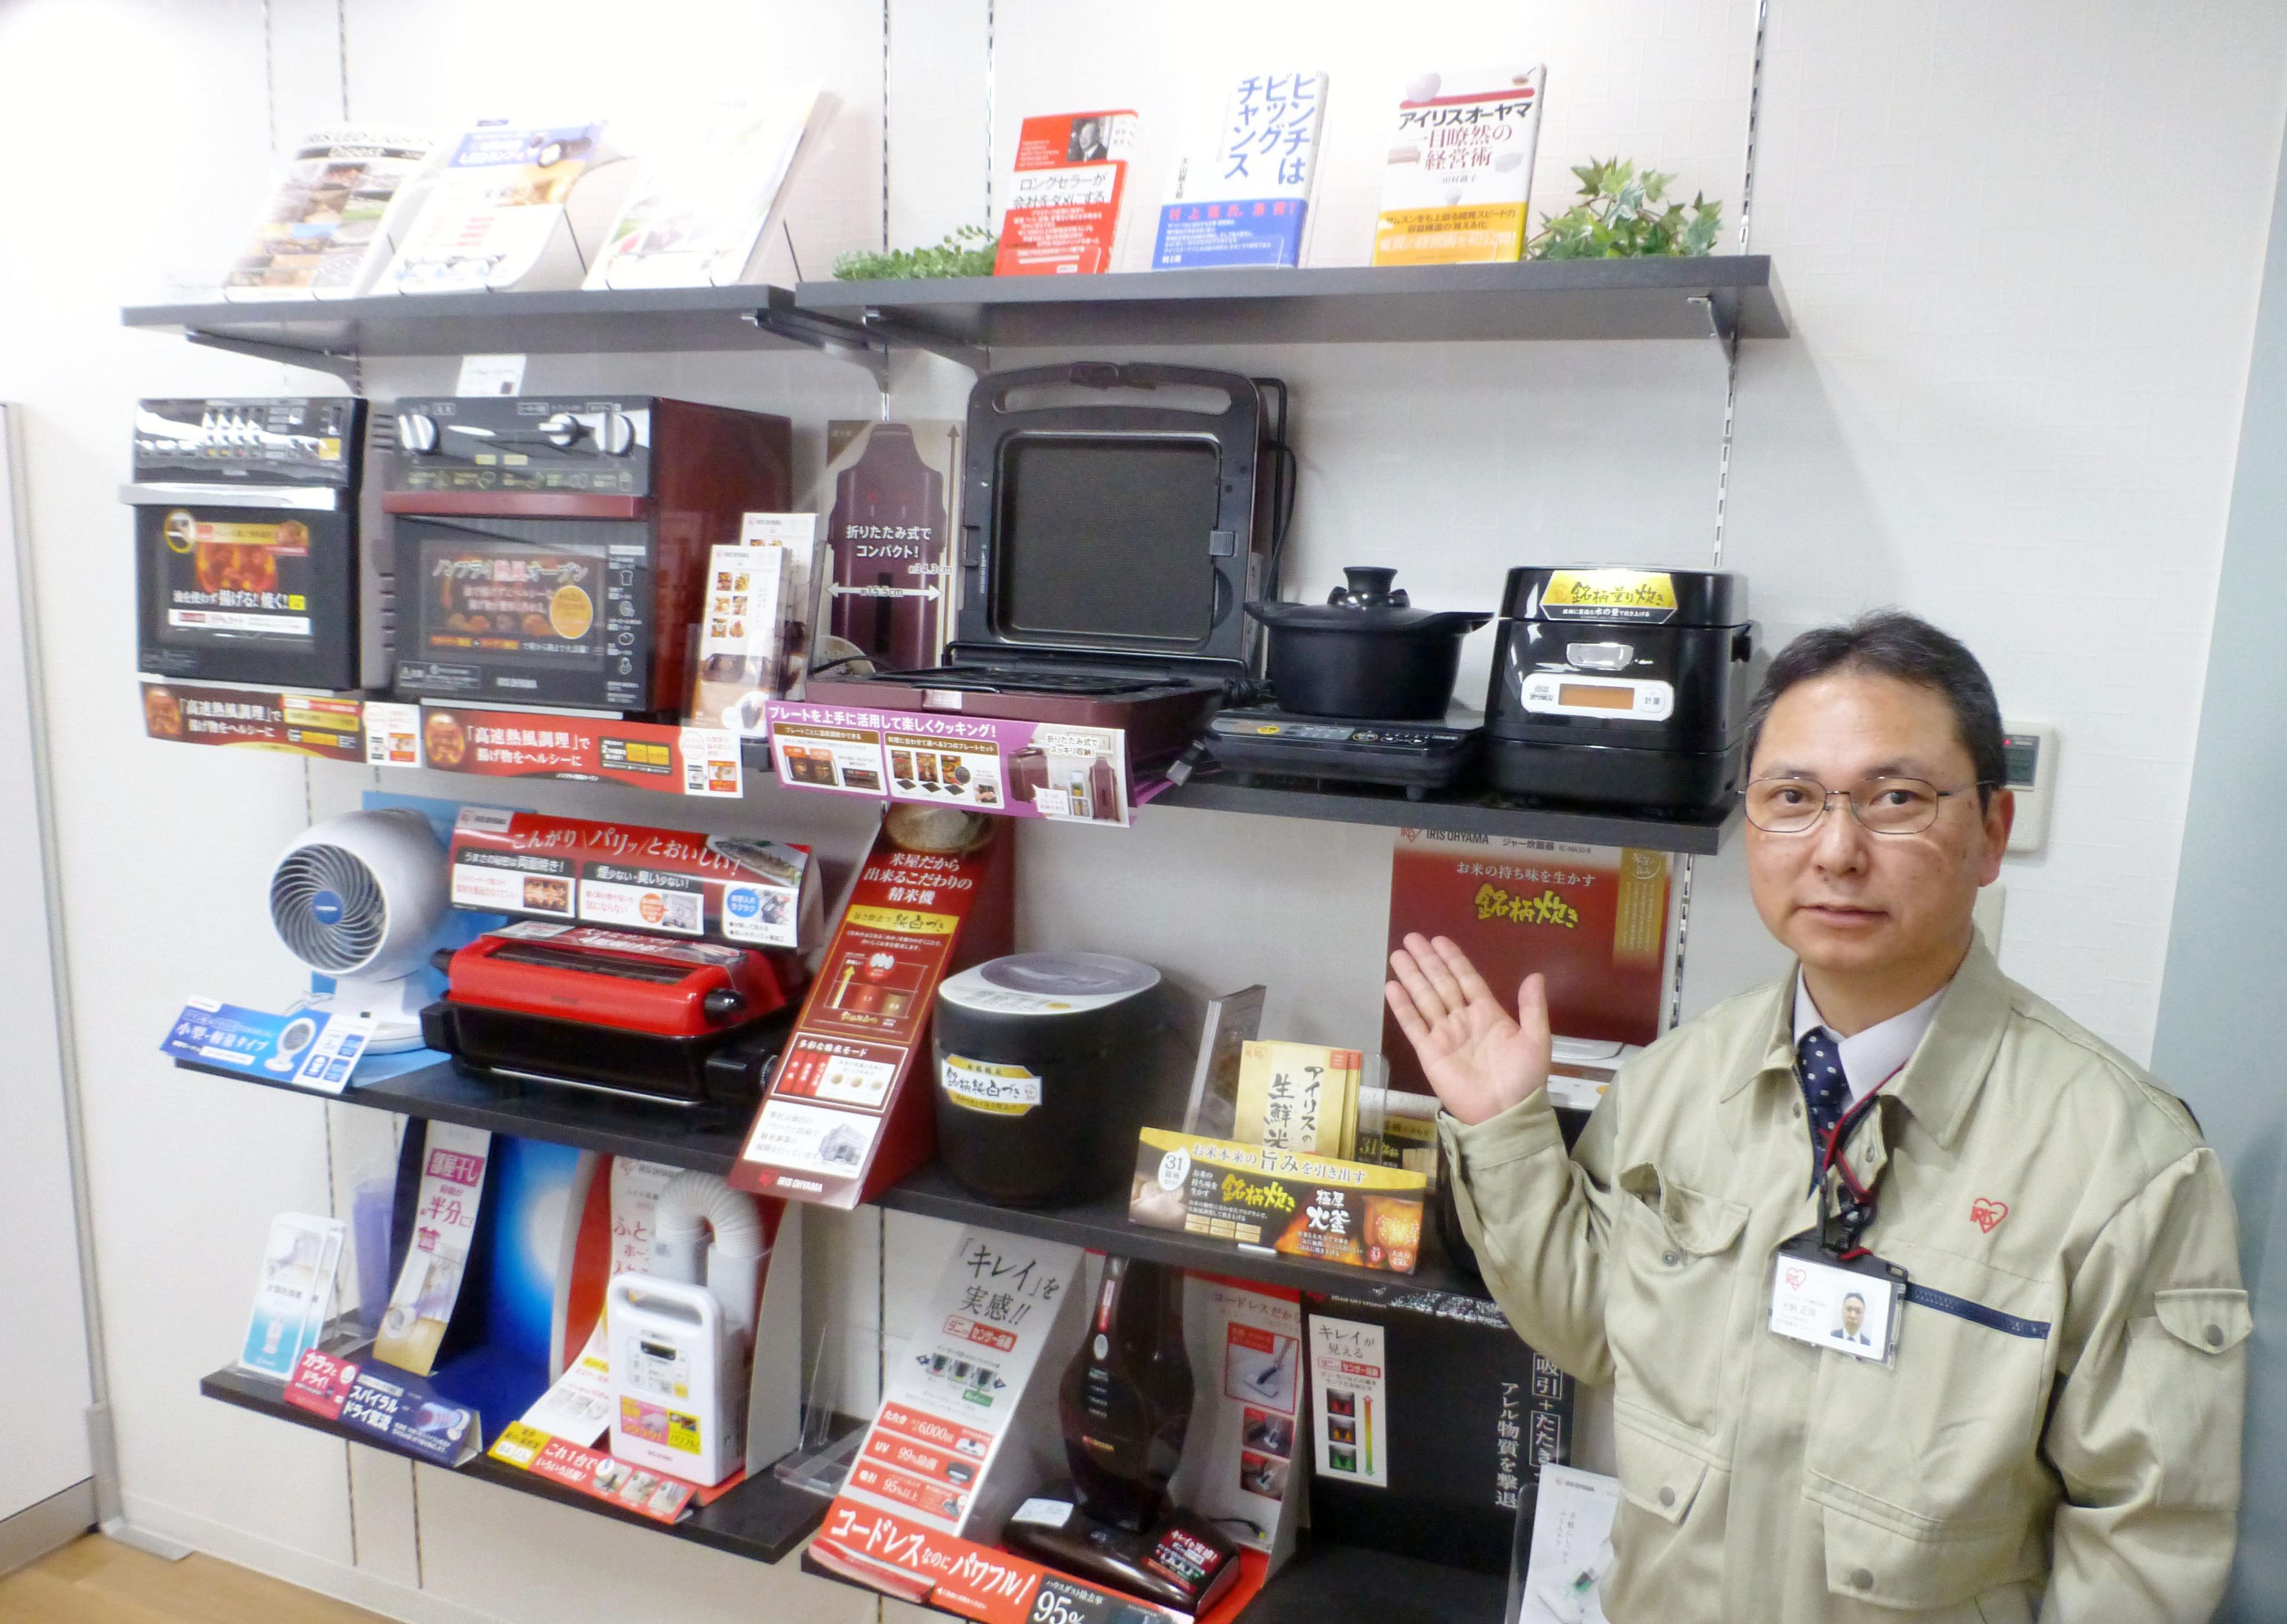 Sendai-based upstart taking on big Osaka appliance makers - The Japan Times